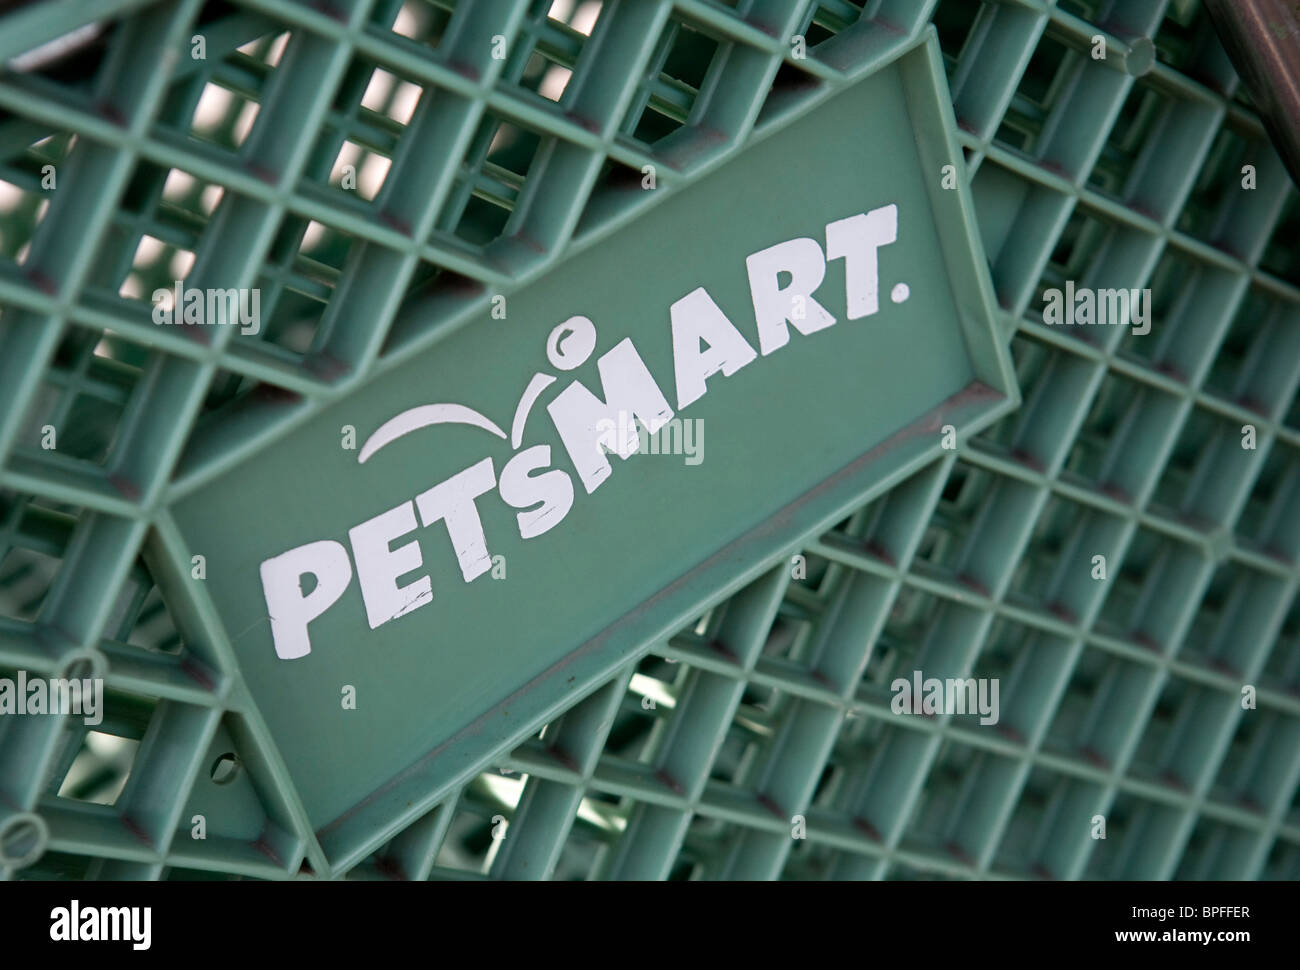 Petsmart Ladengeschäft in vorstädtischen Maryland. Stockfoto